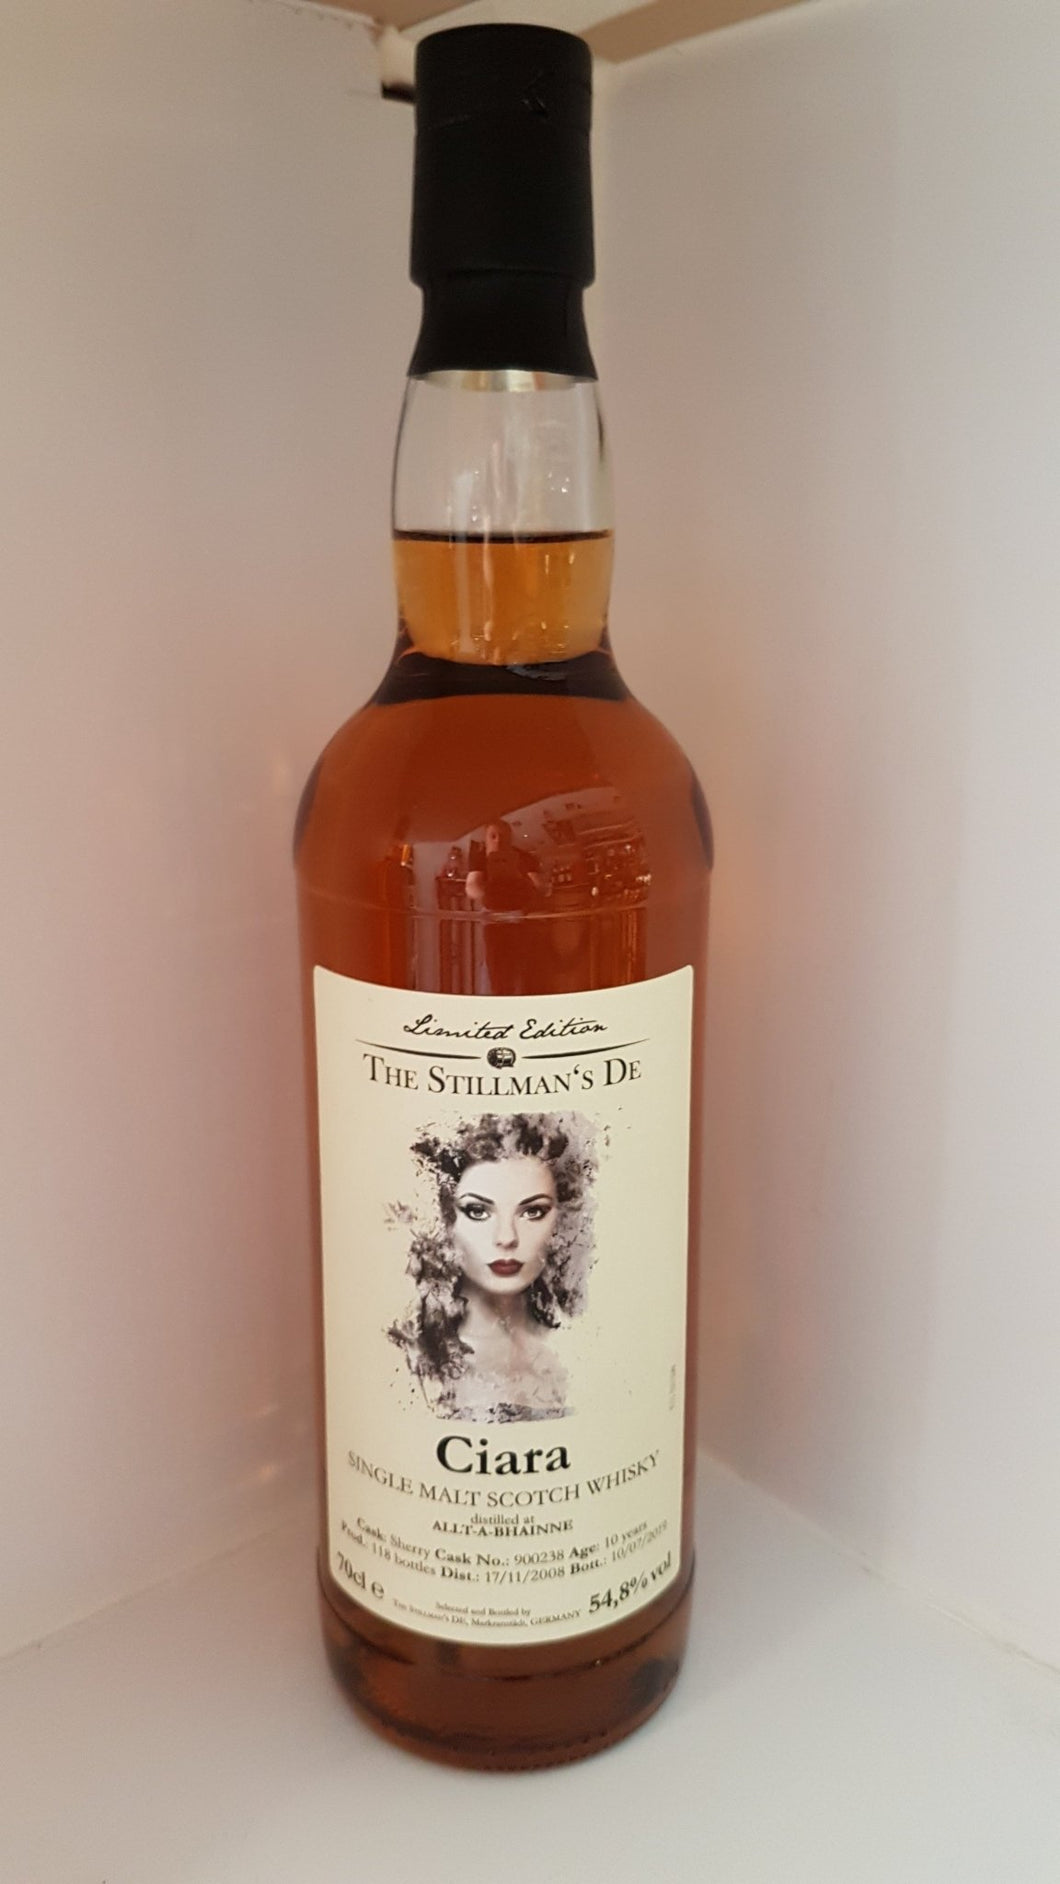 The Stillman´s Whisky Ciara Allt a bhainne 0.7 54.8% inn-out-shop